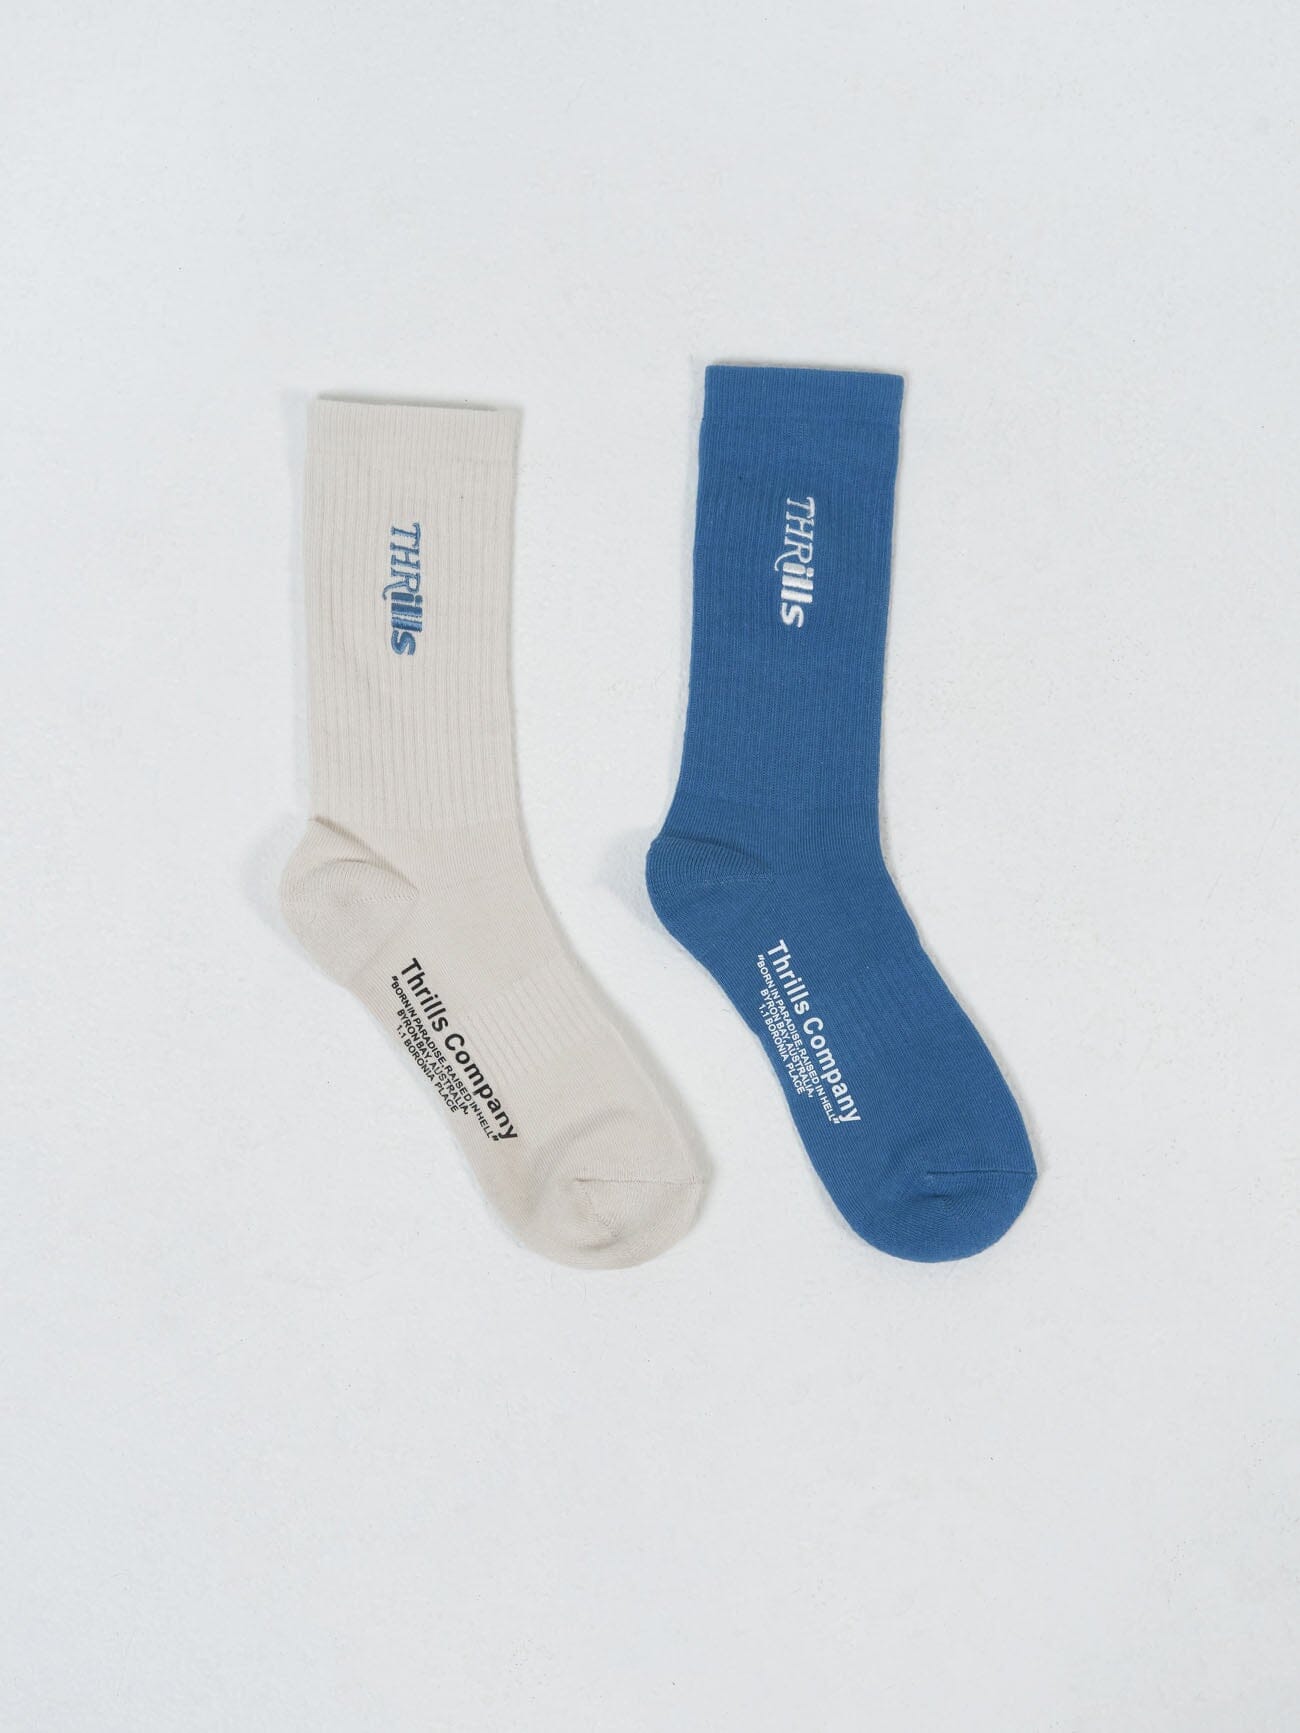 Split Decision 2 Pack Socks - Heritage White-Alure Blue